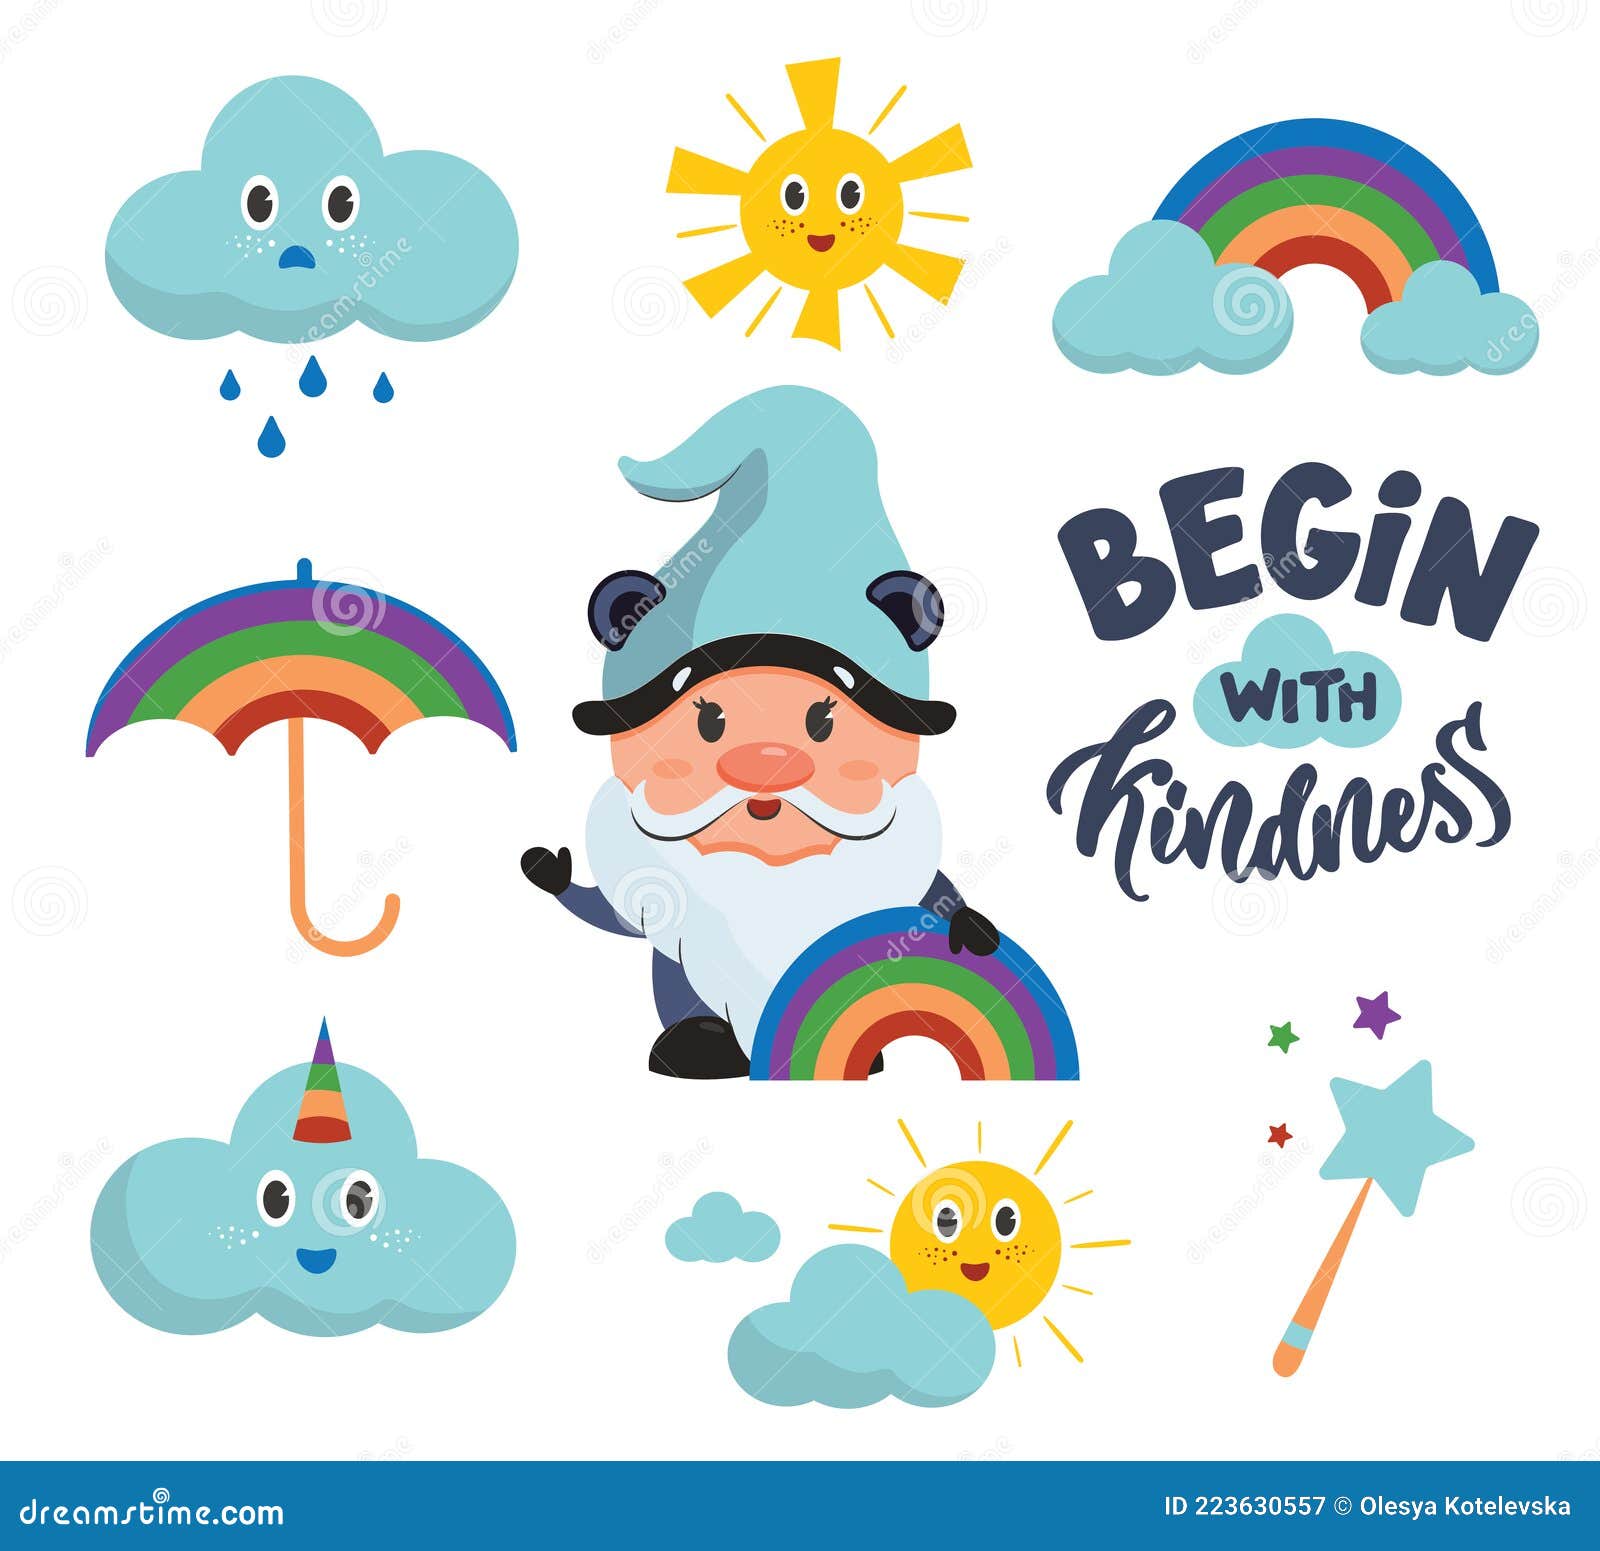 Cloud Rainbow Stickers, Kindness Stickers, Pride